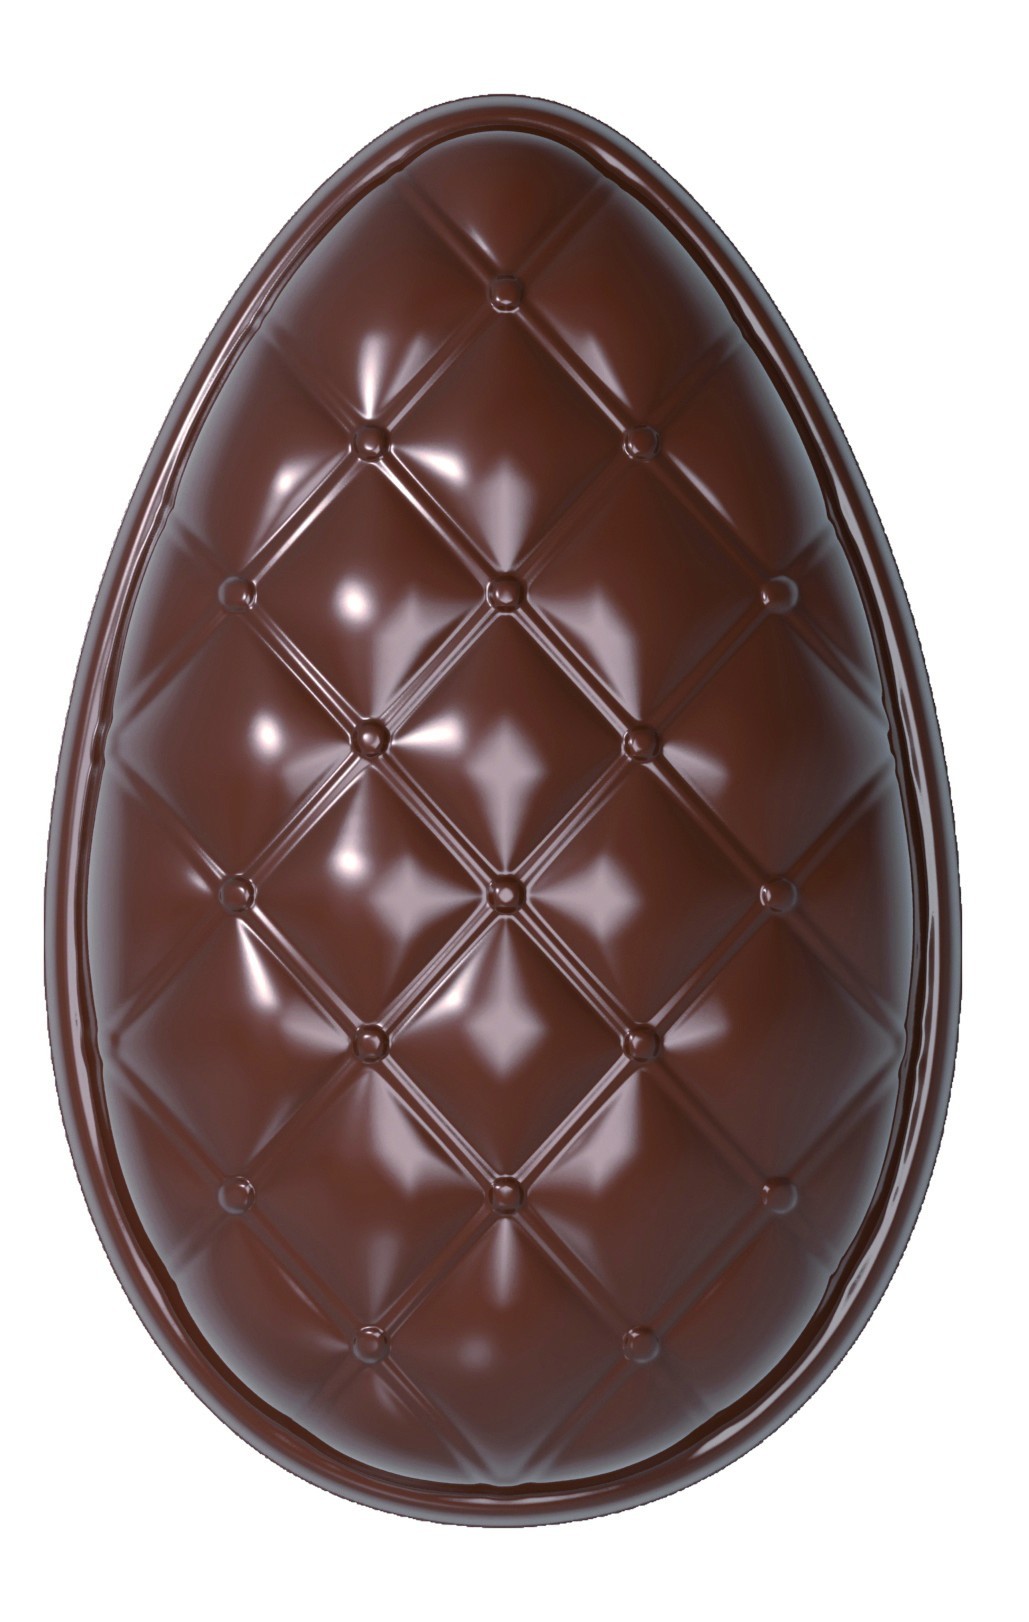 Moule chocolat 1 demi œuf Chesterield L 112mm - Matfer-Bourgeat